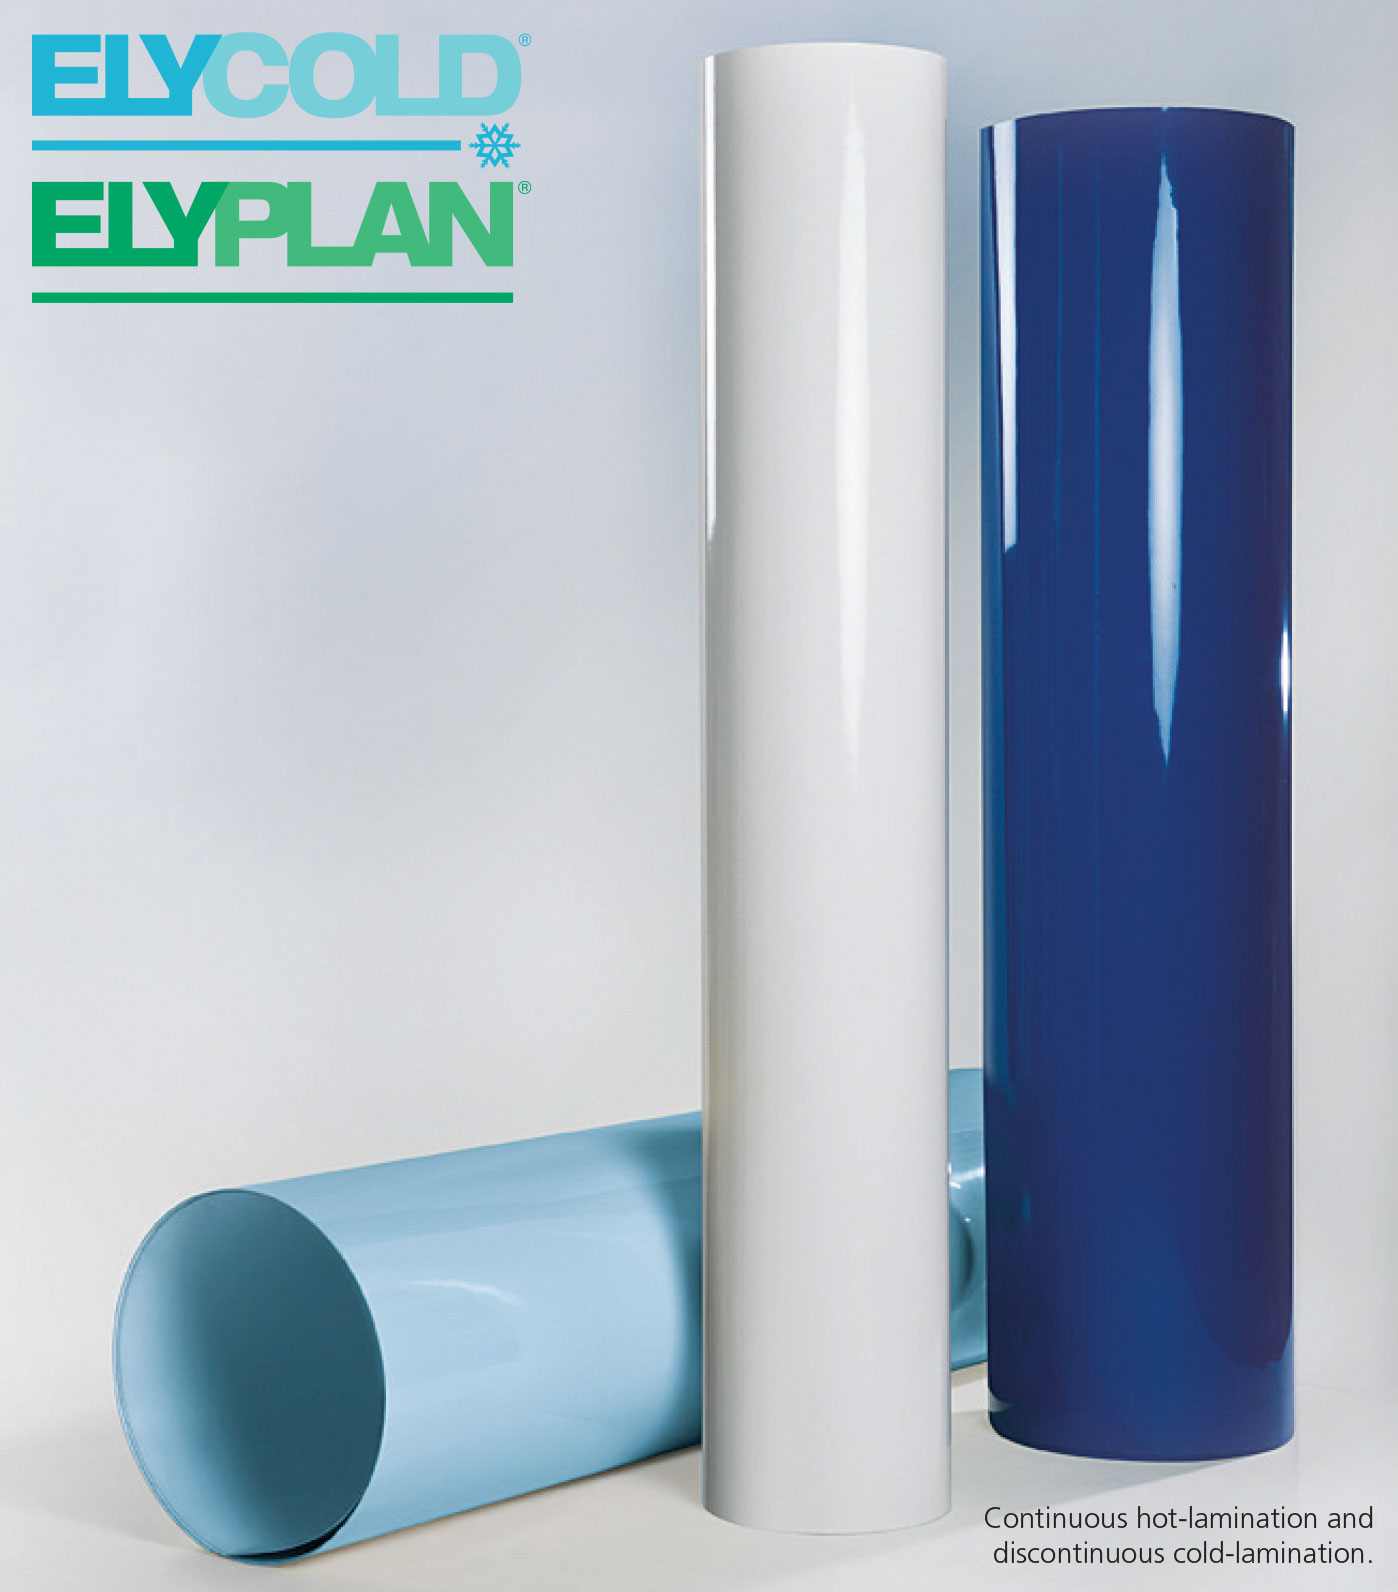 Brianza Plastica Fibreglass: Elycold & Elyplan